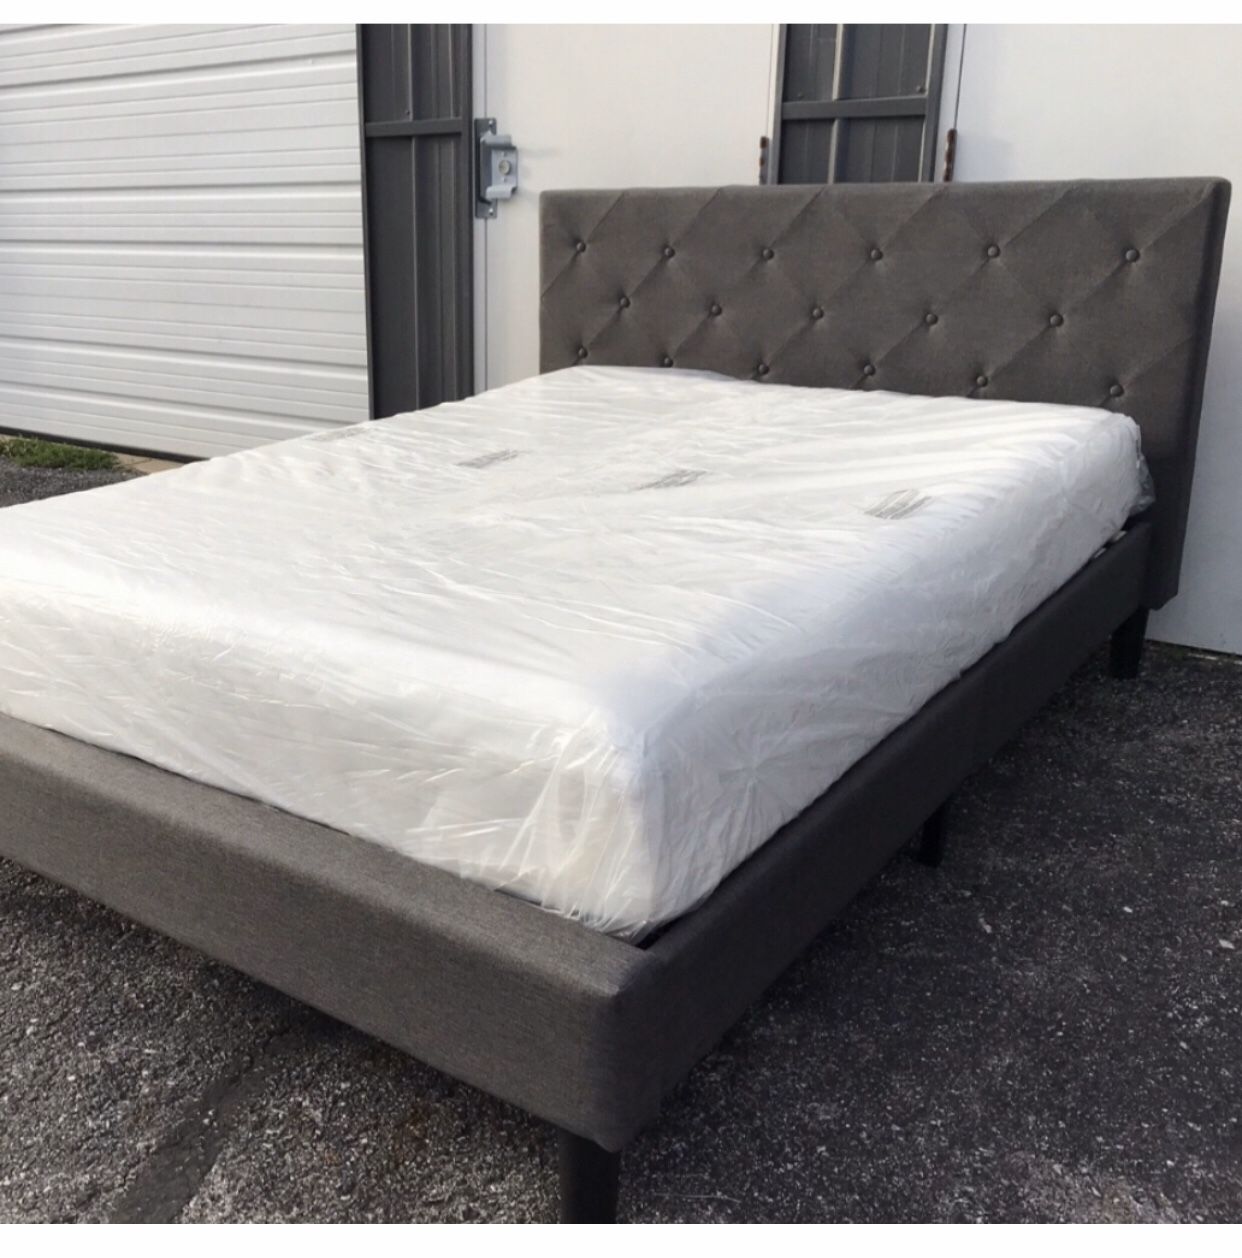 New KING size platform bed frame and 10” gel memory foam mattress